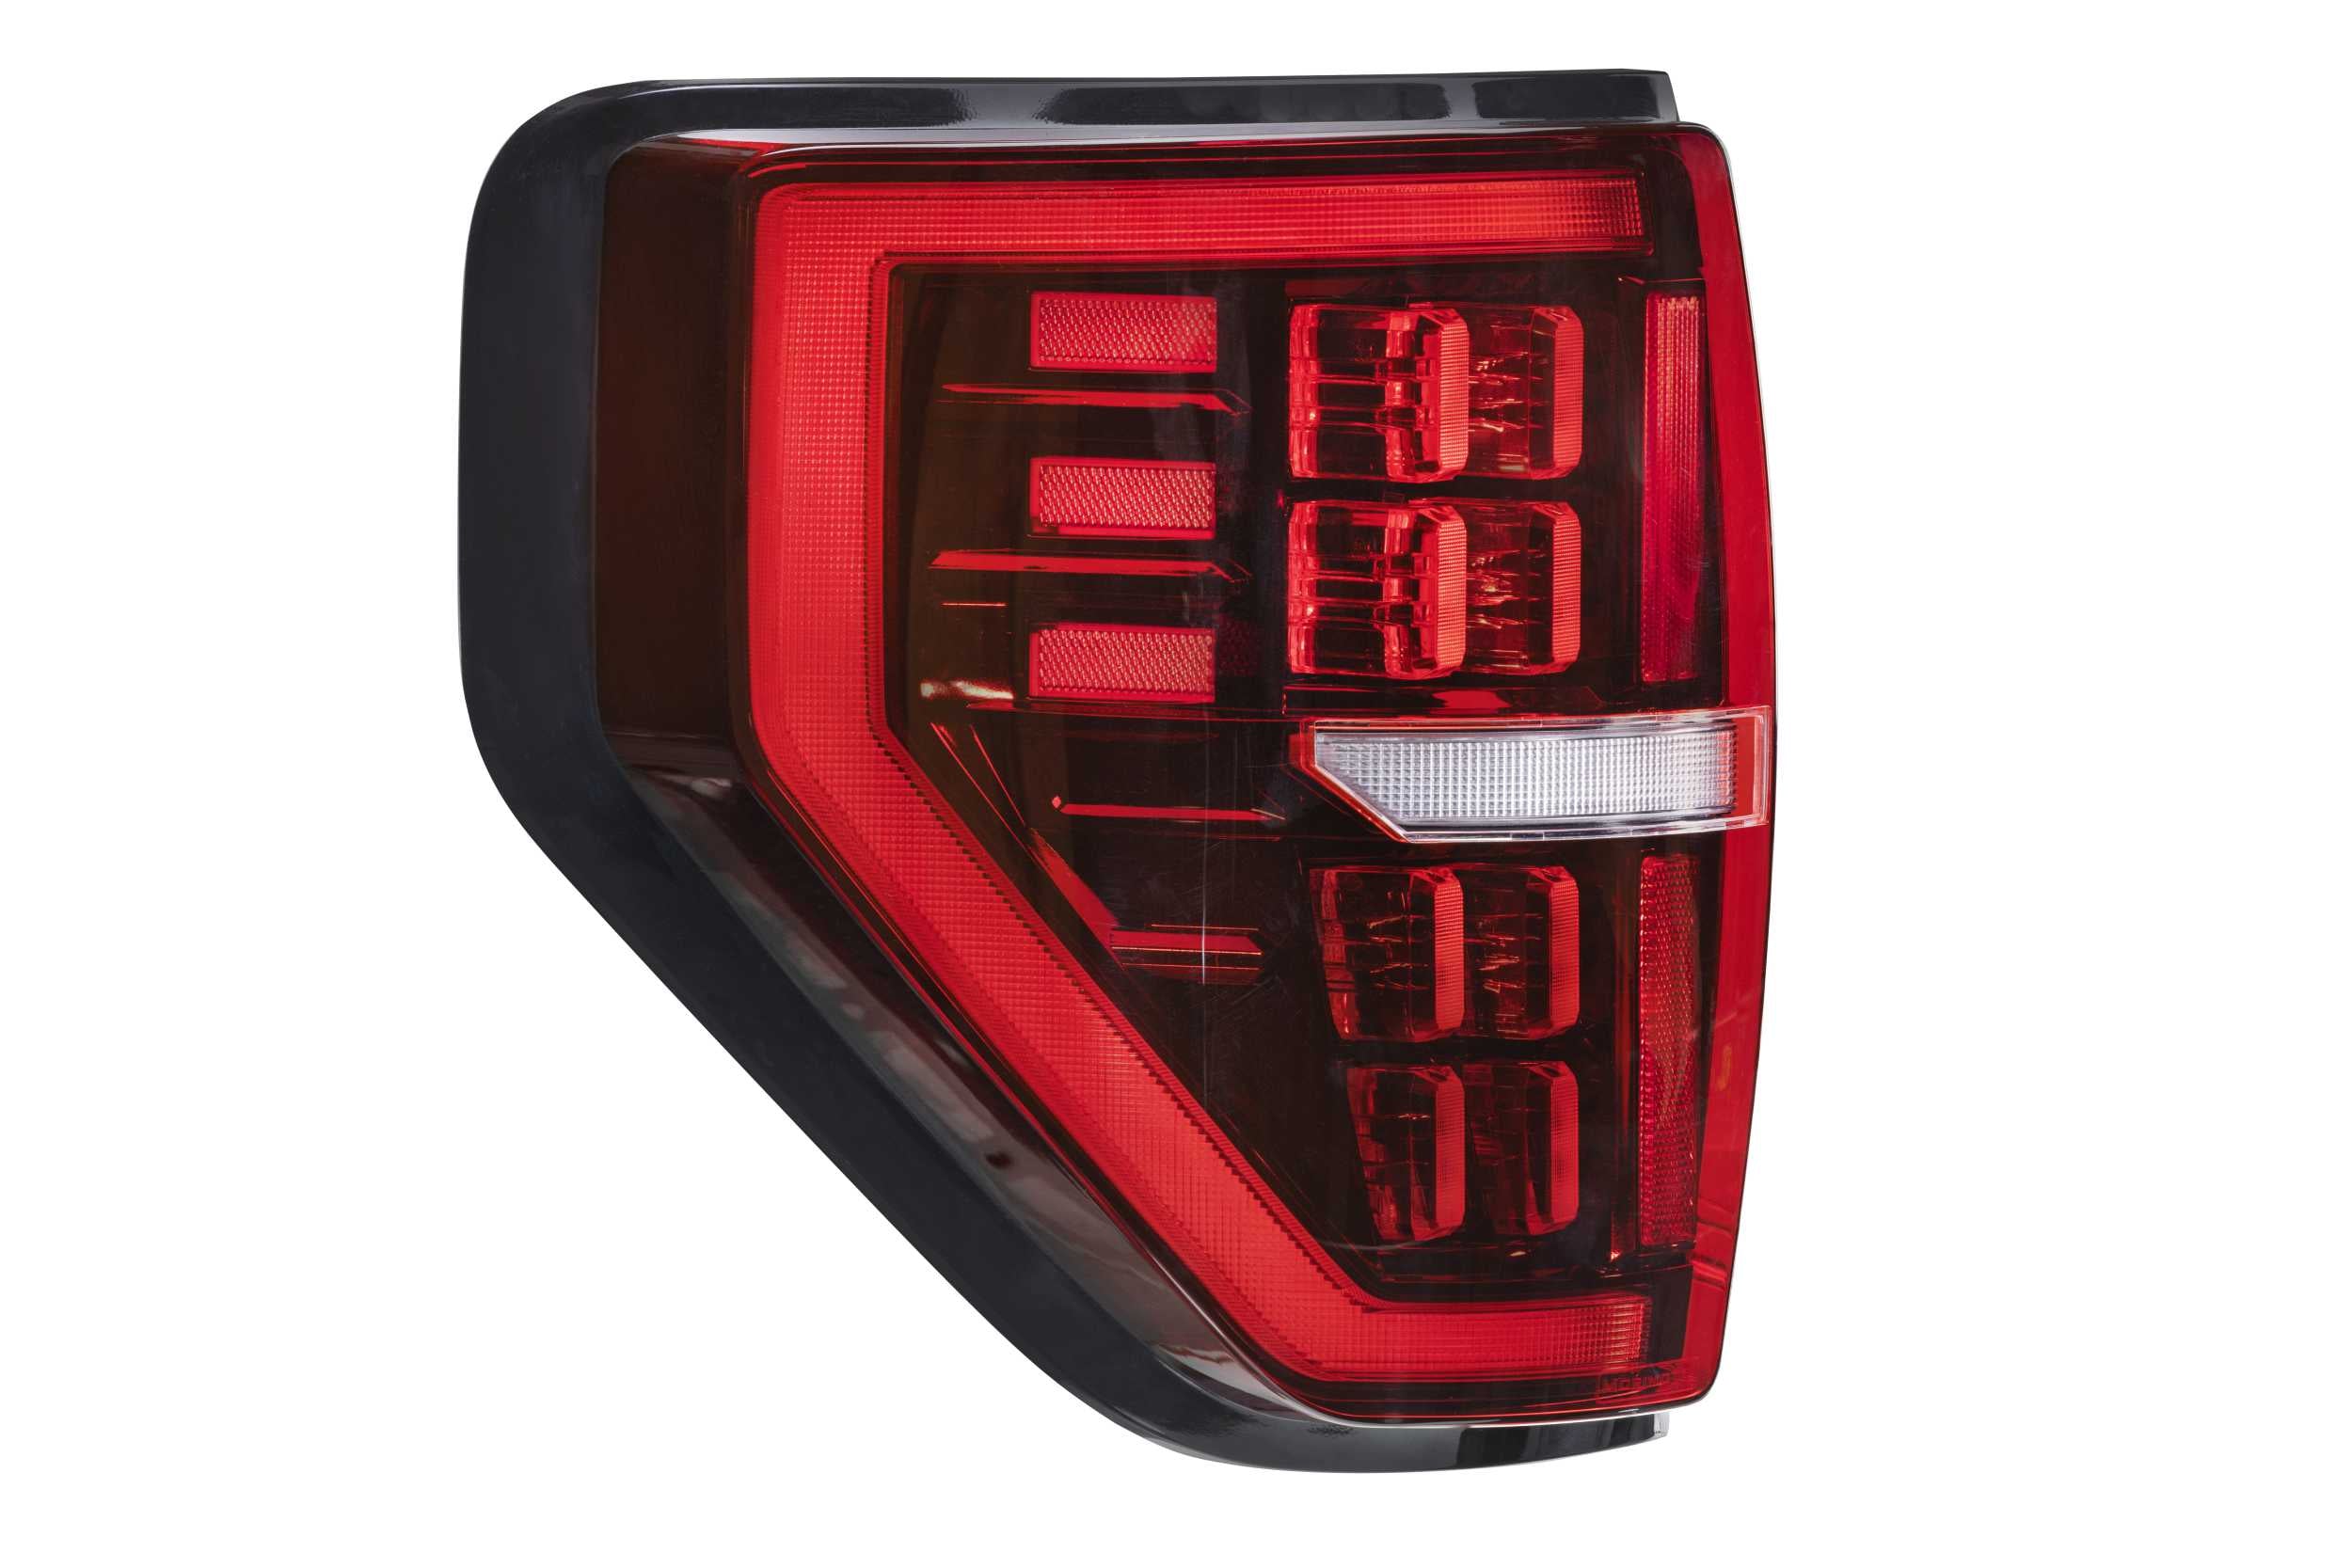 Ford F150 (09-14) (Pair / Red): Morimoto XB LED Tails-LF720